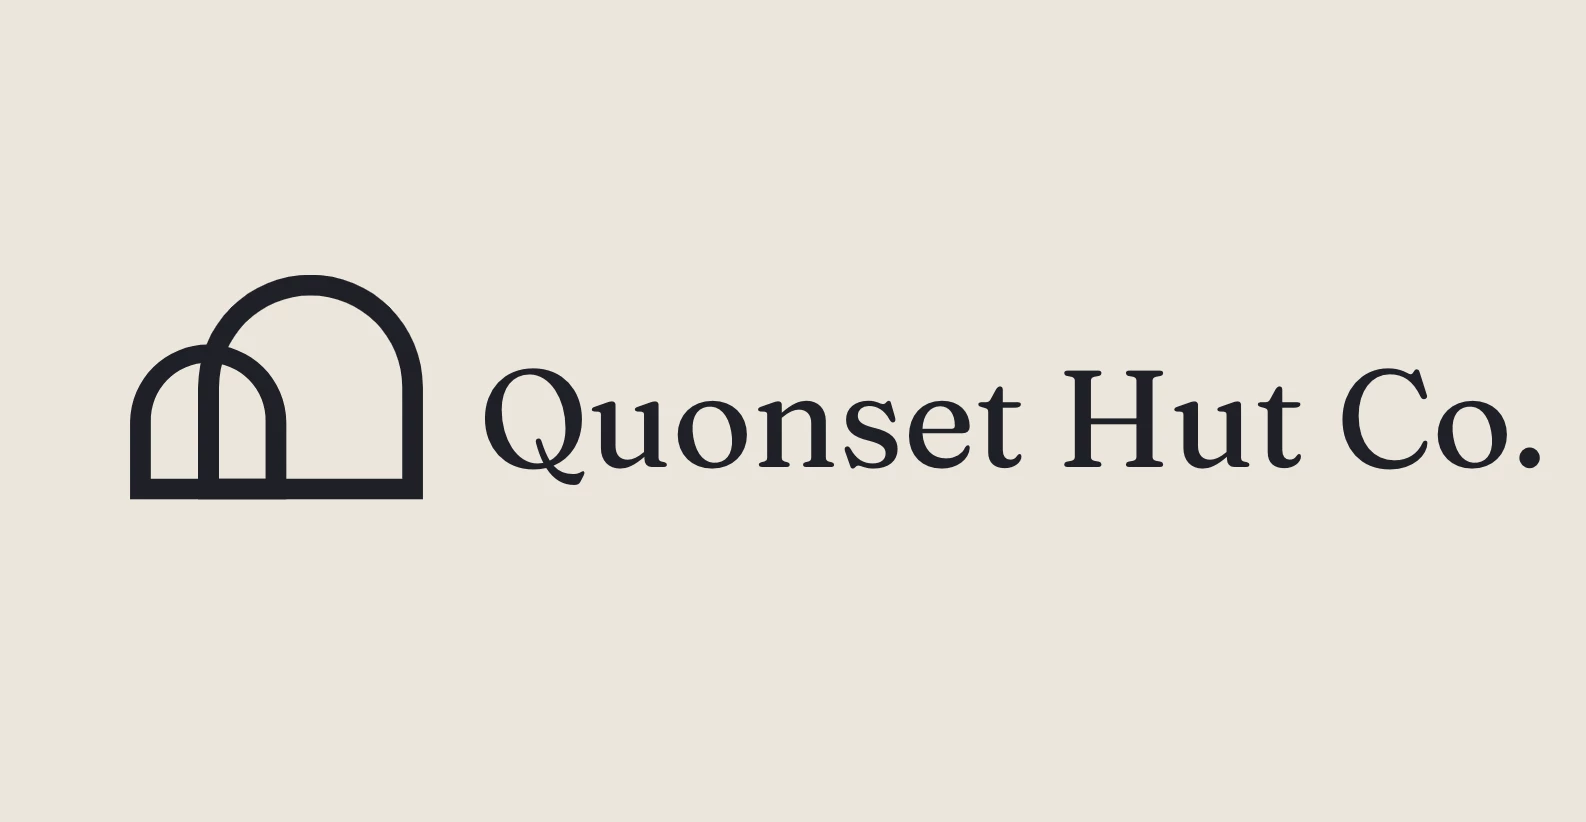 Quonset Hut Co.